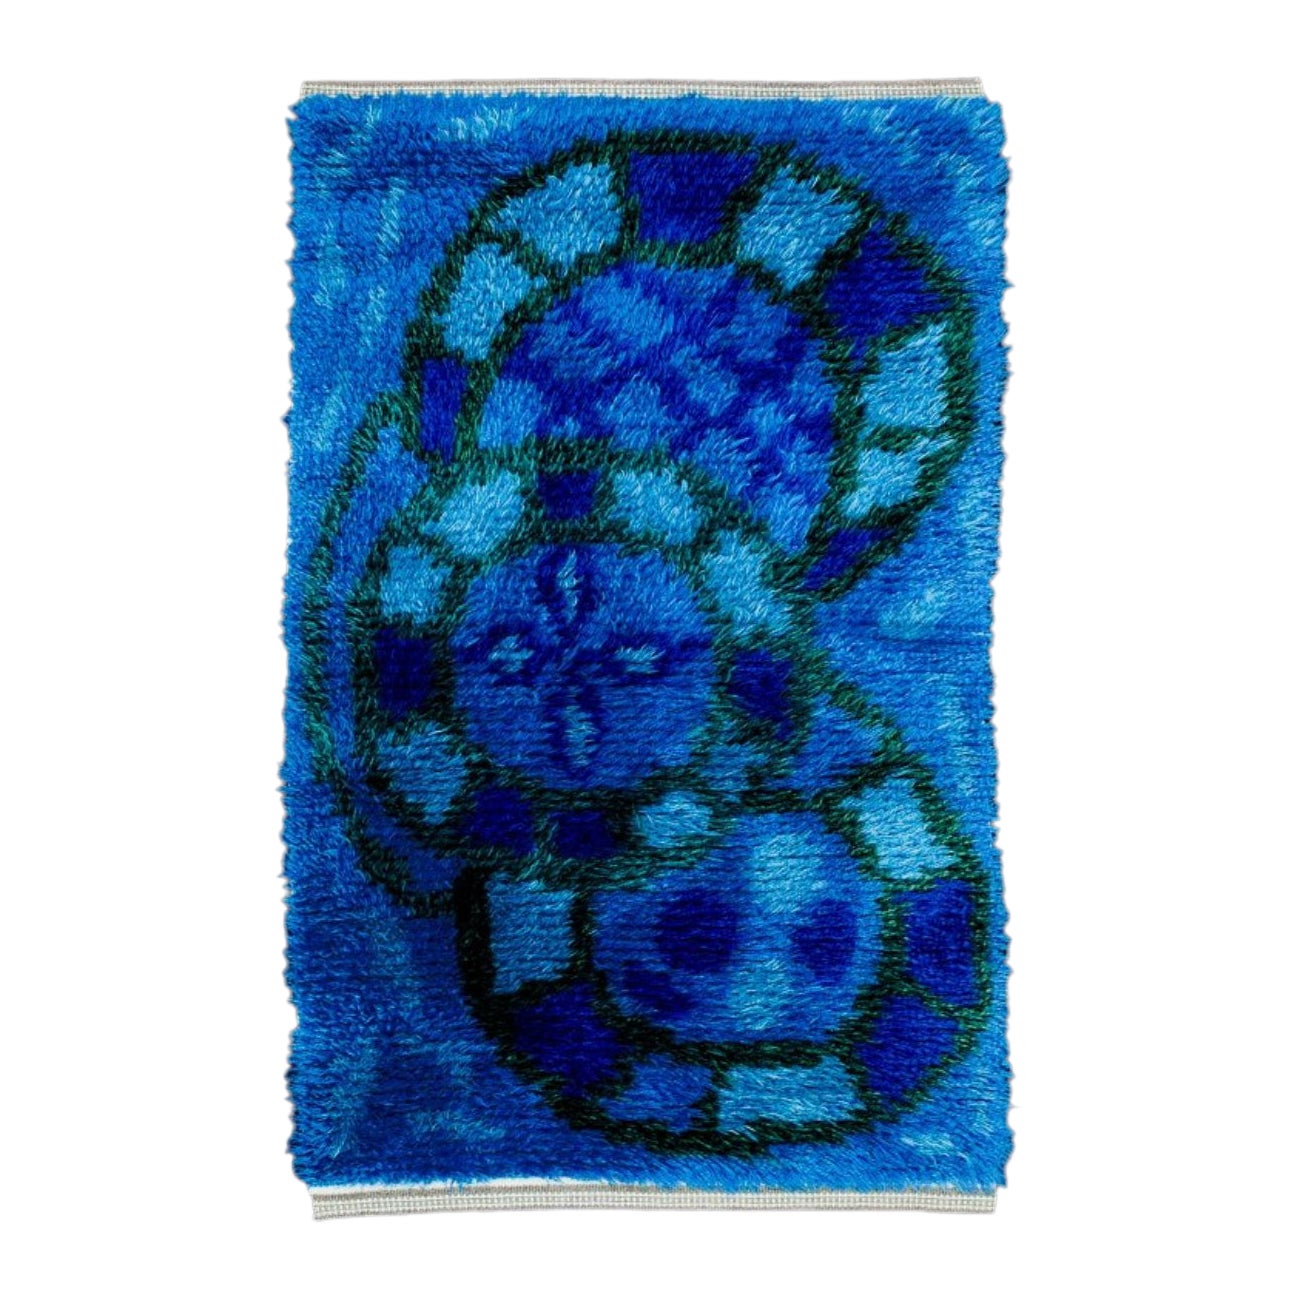 Swedish designer, handwoven rya carpet in blue, violet, and green colours.